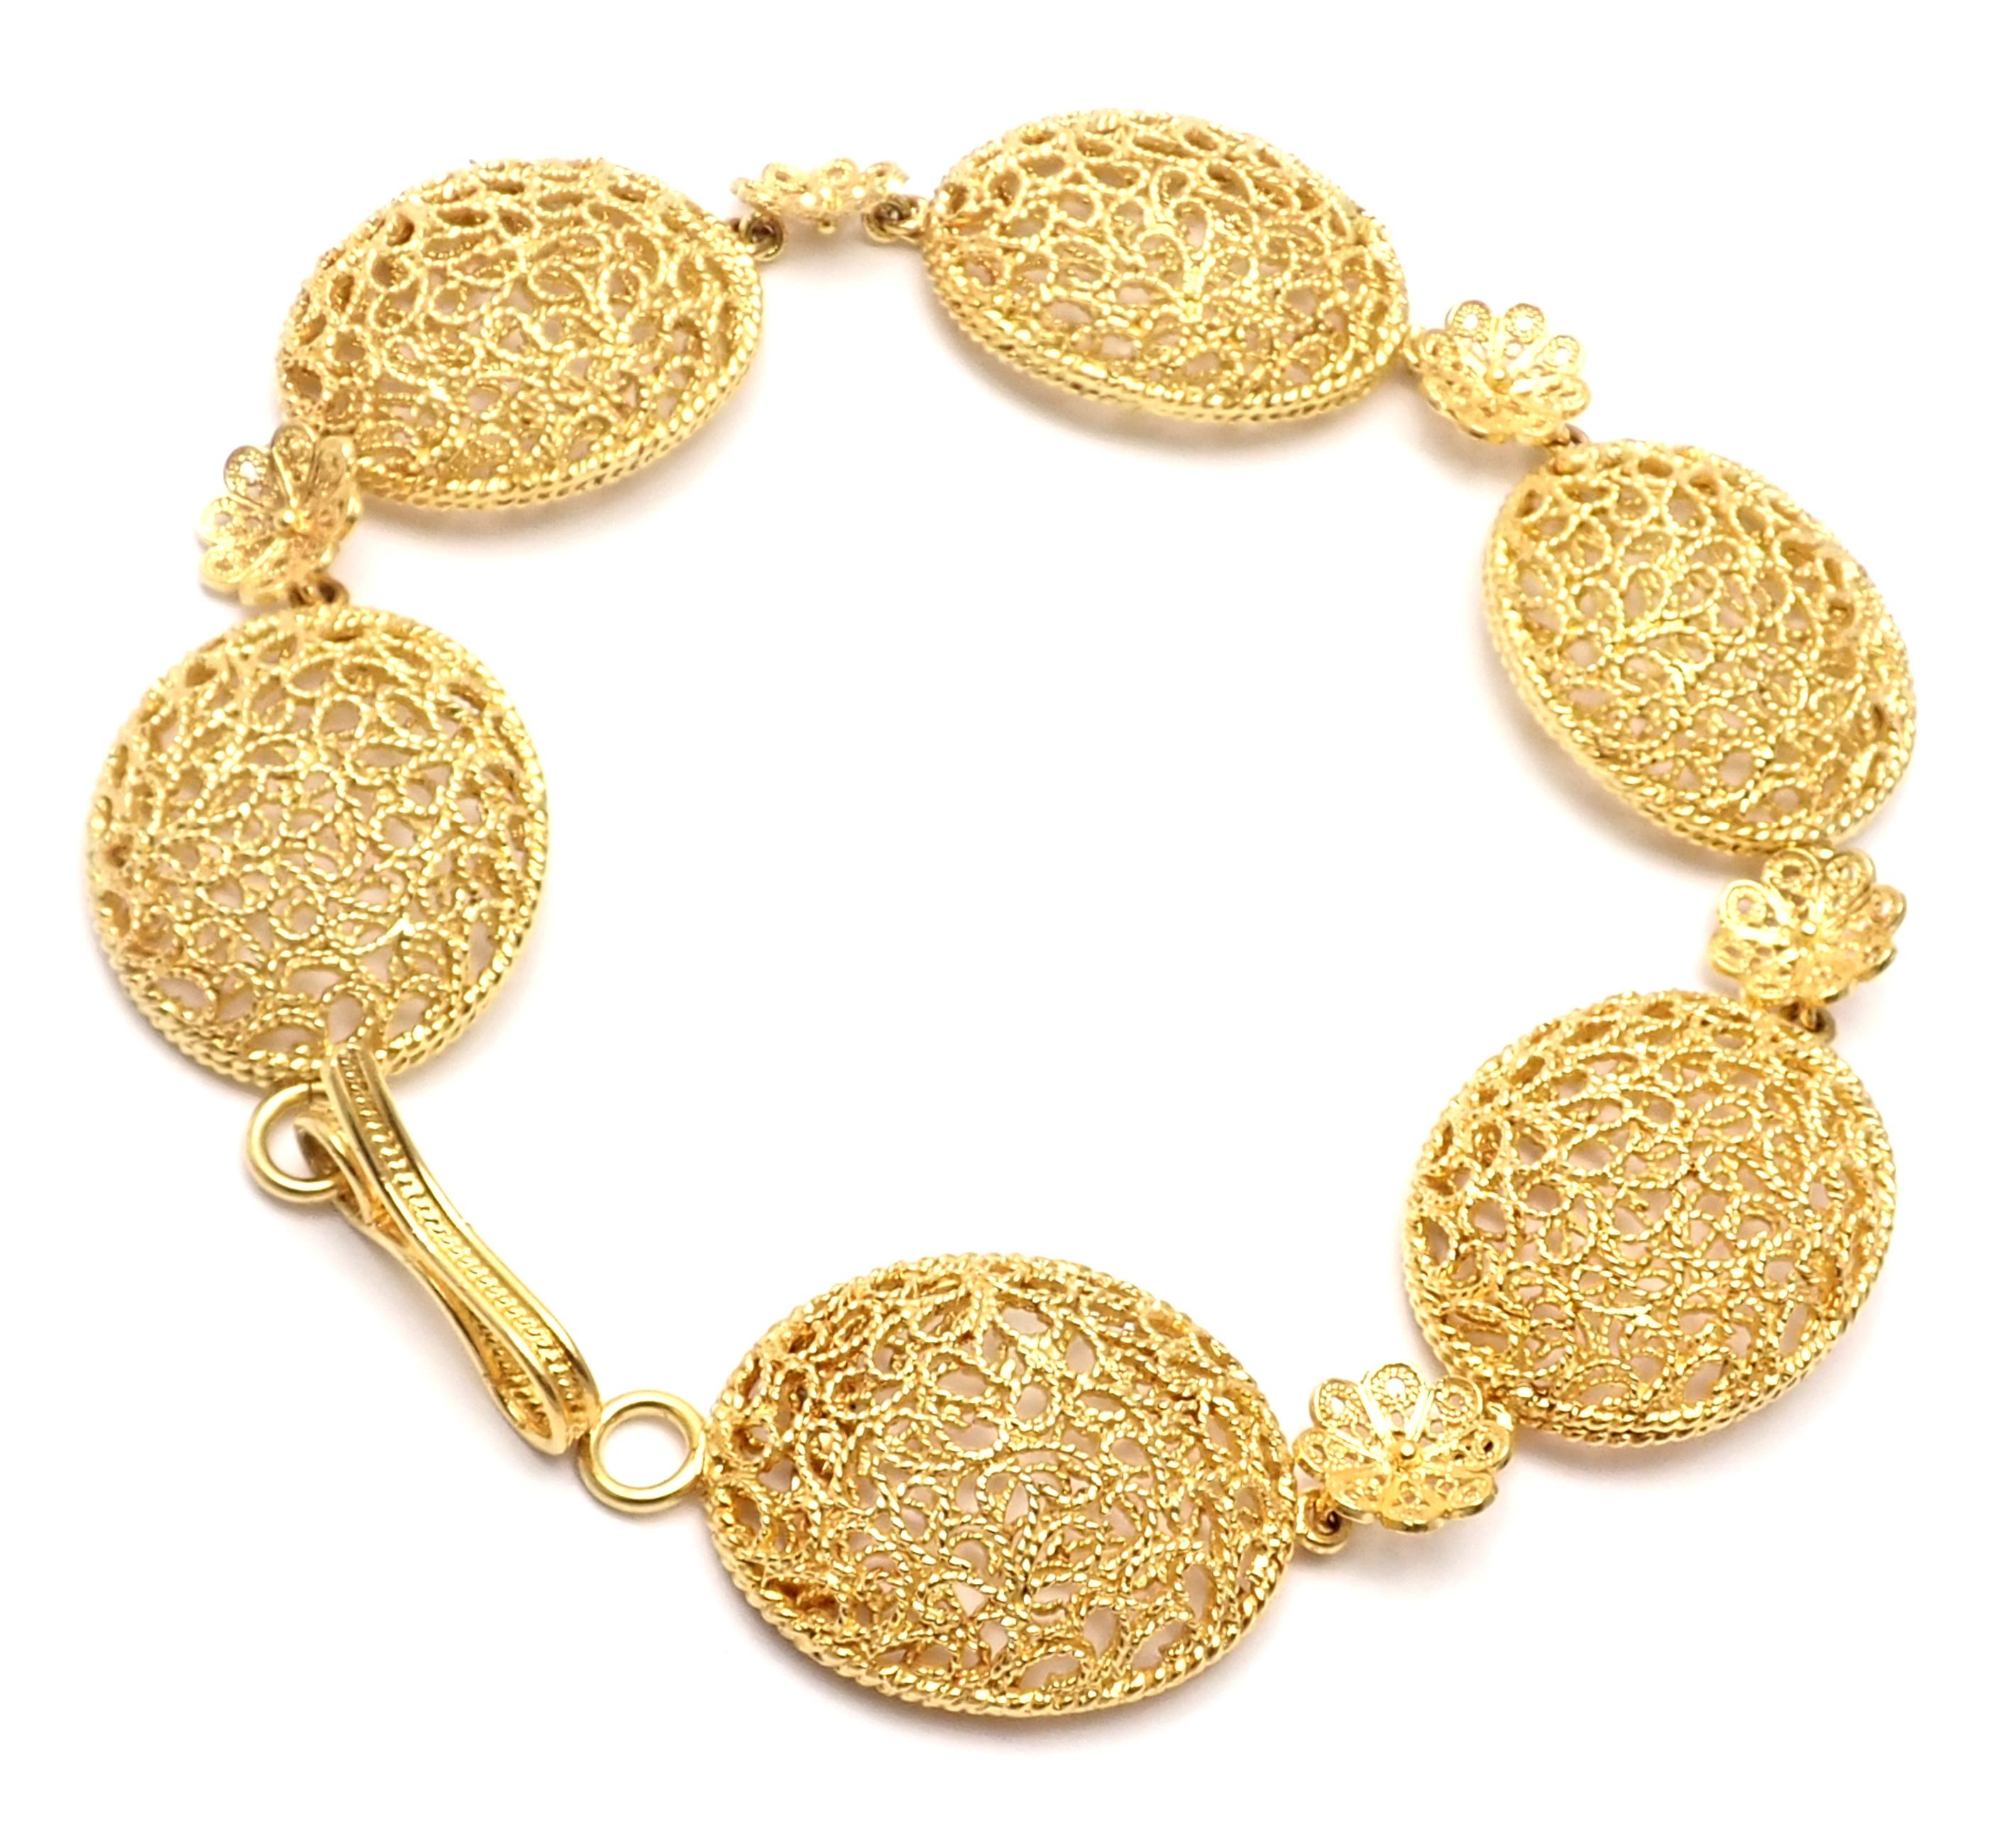 Women's or Men's Buccellati Filidoro Yellow Gold Link Bracelet